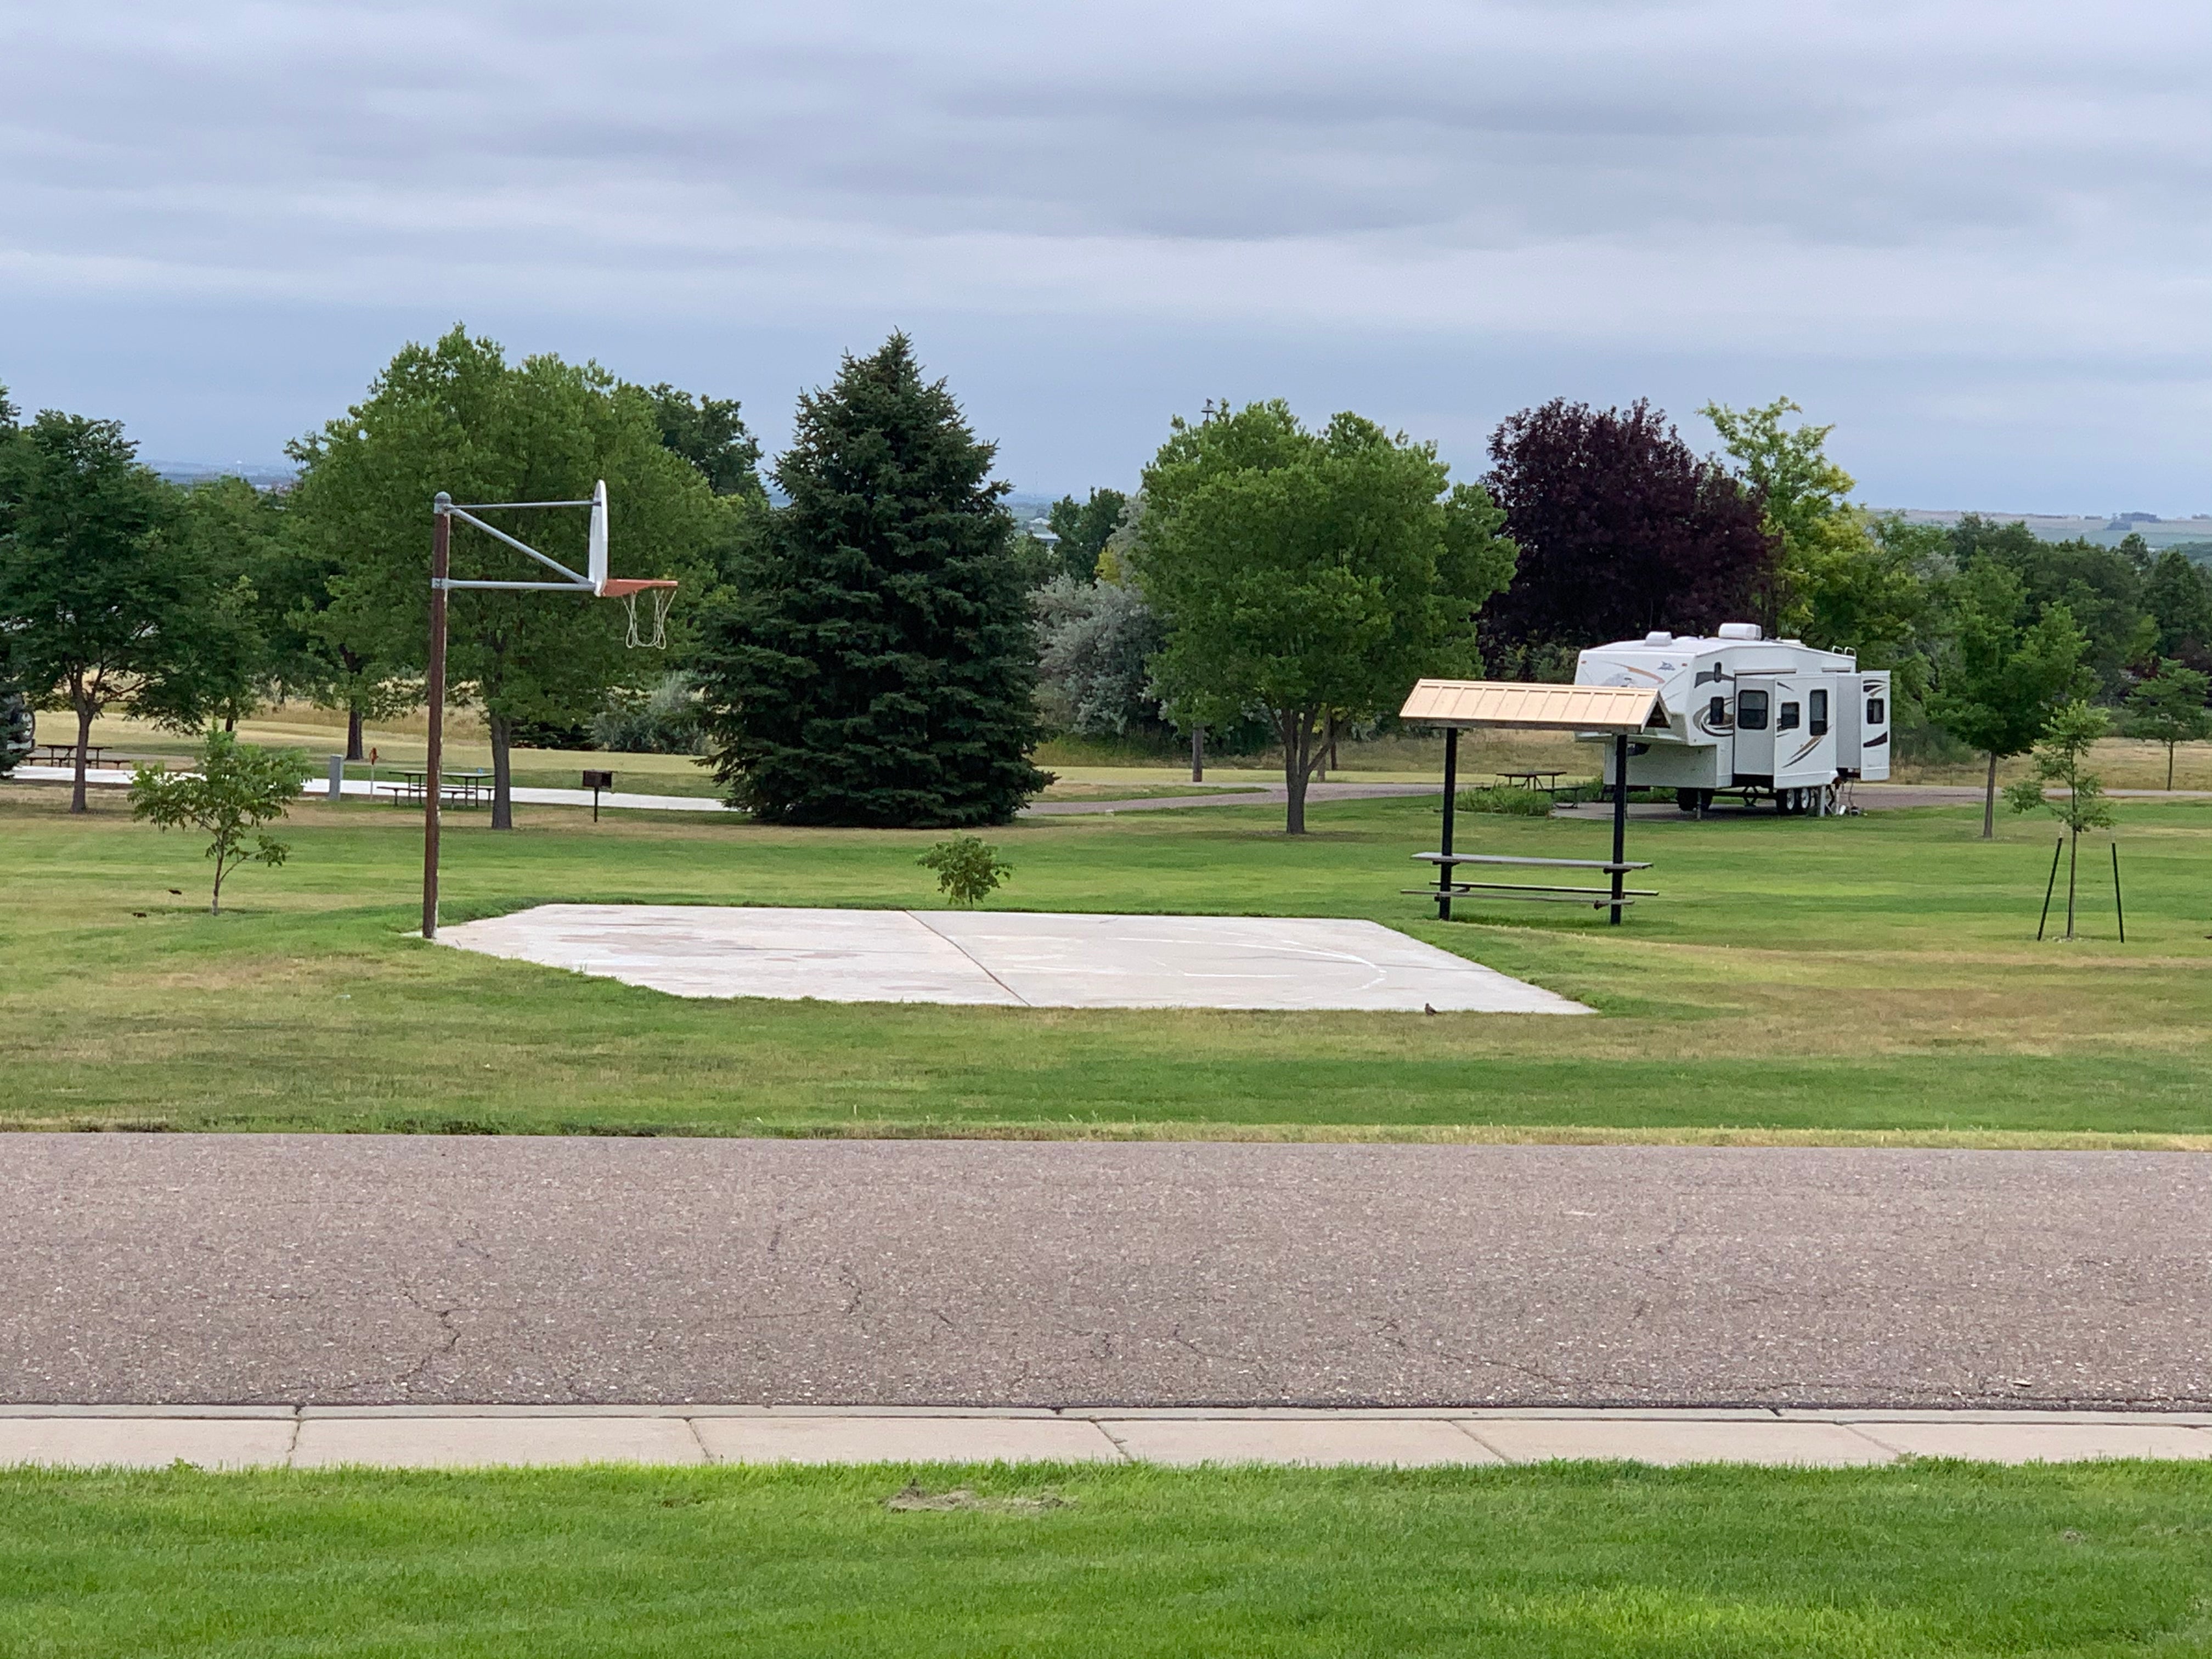 Small basketball court